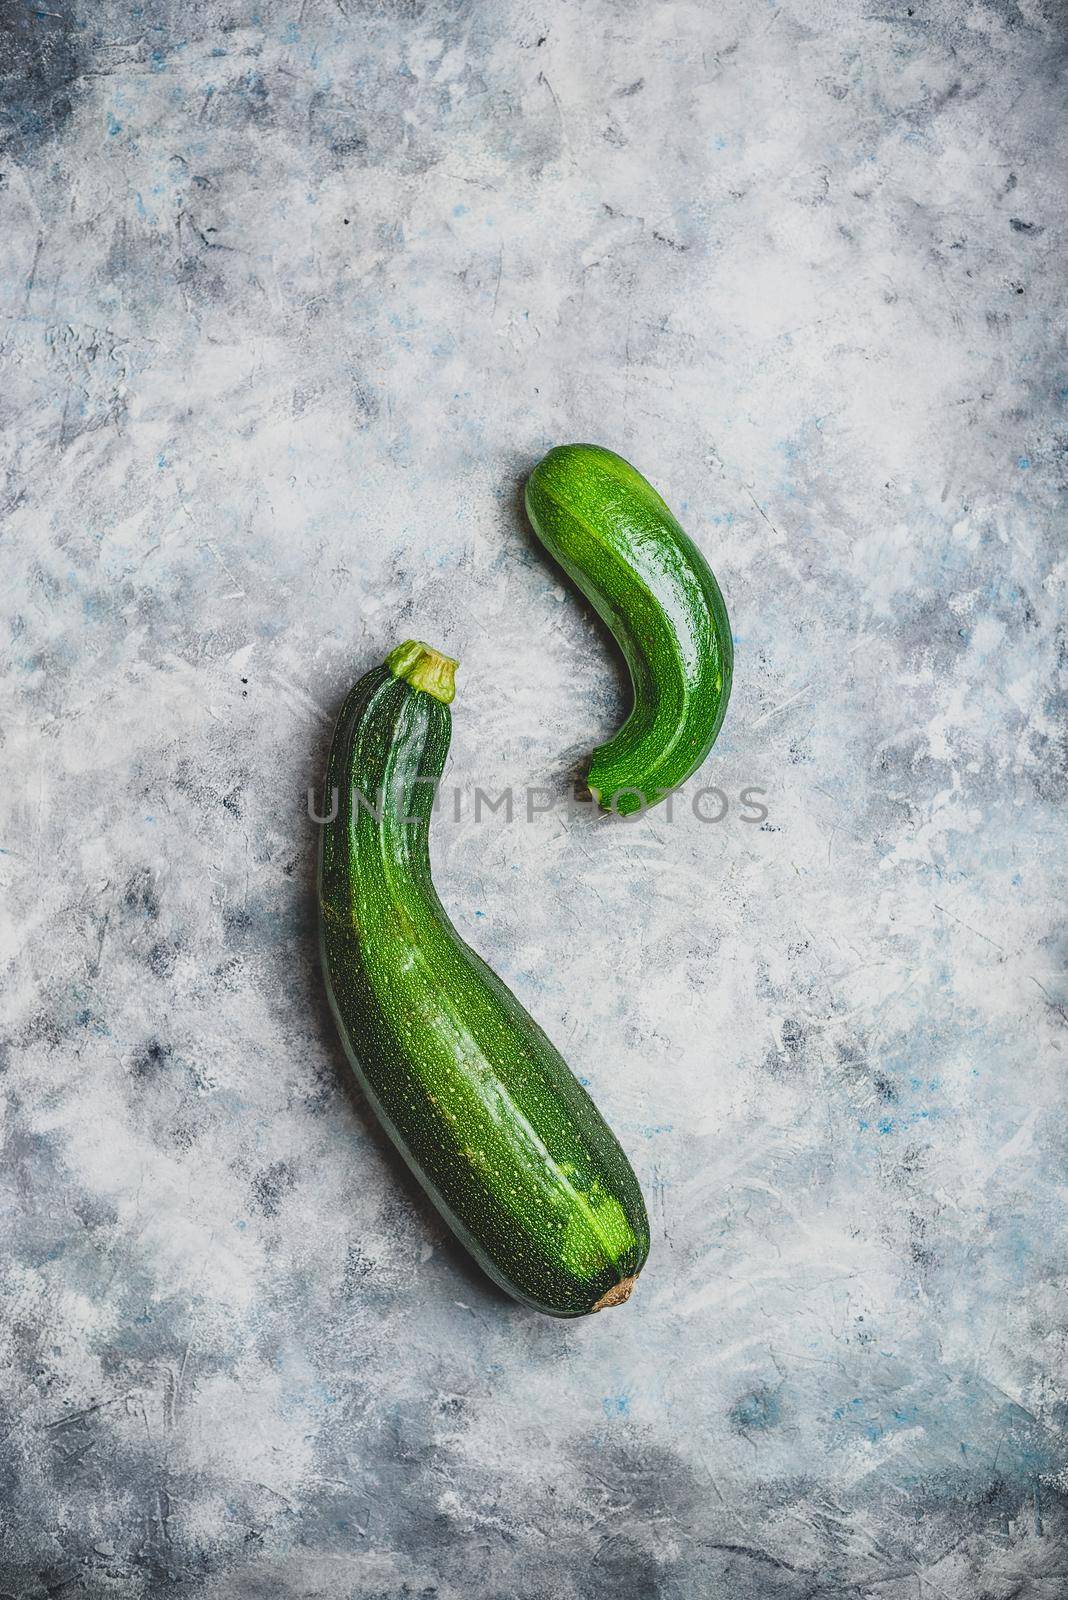 Two fresh zucchini by Seva_blsv